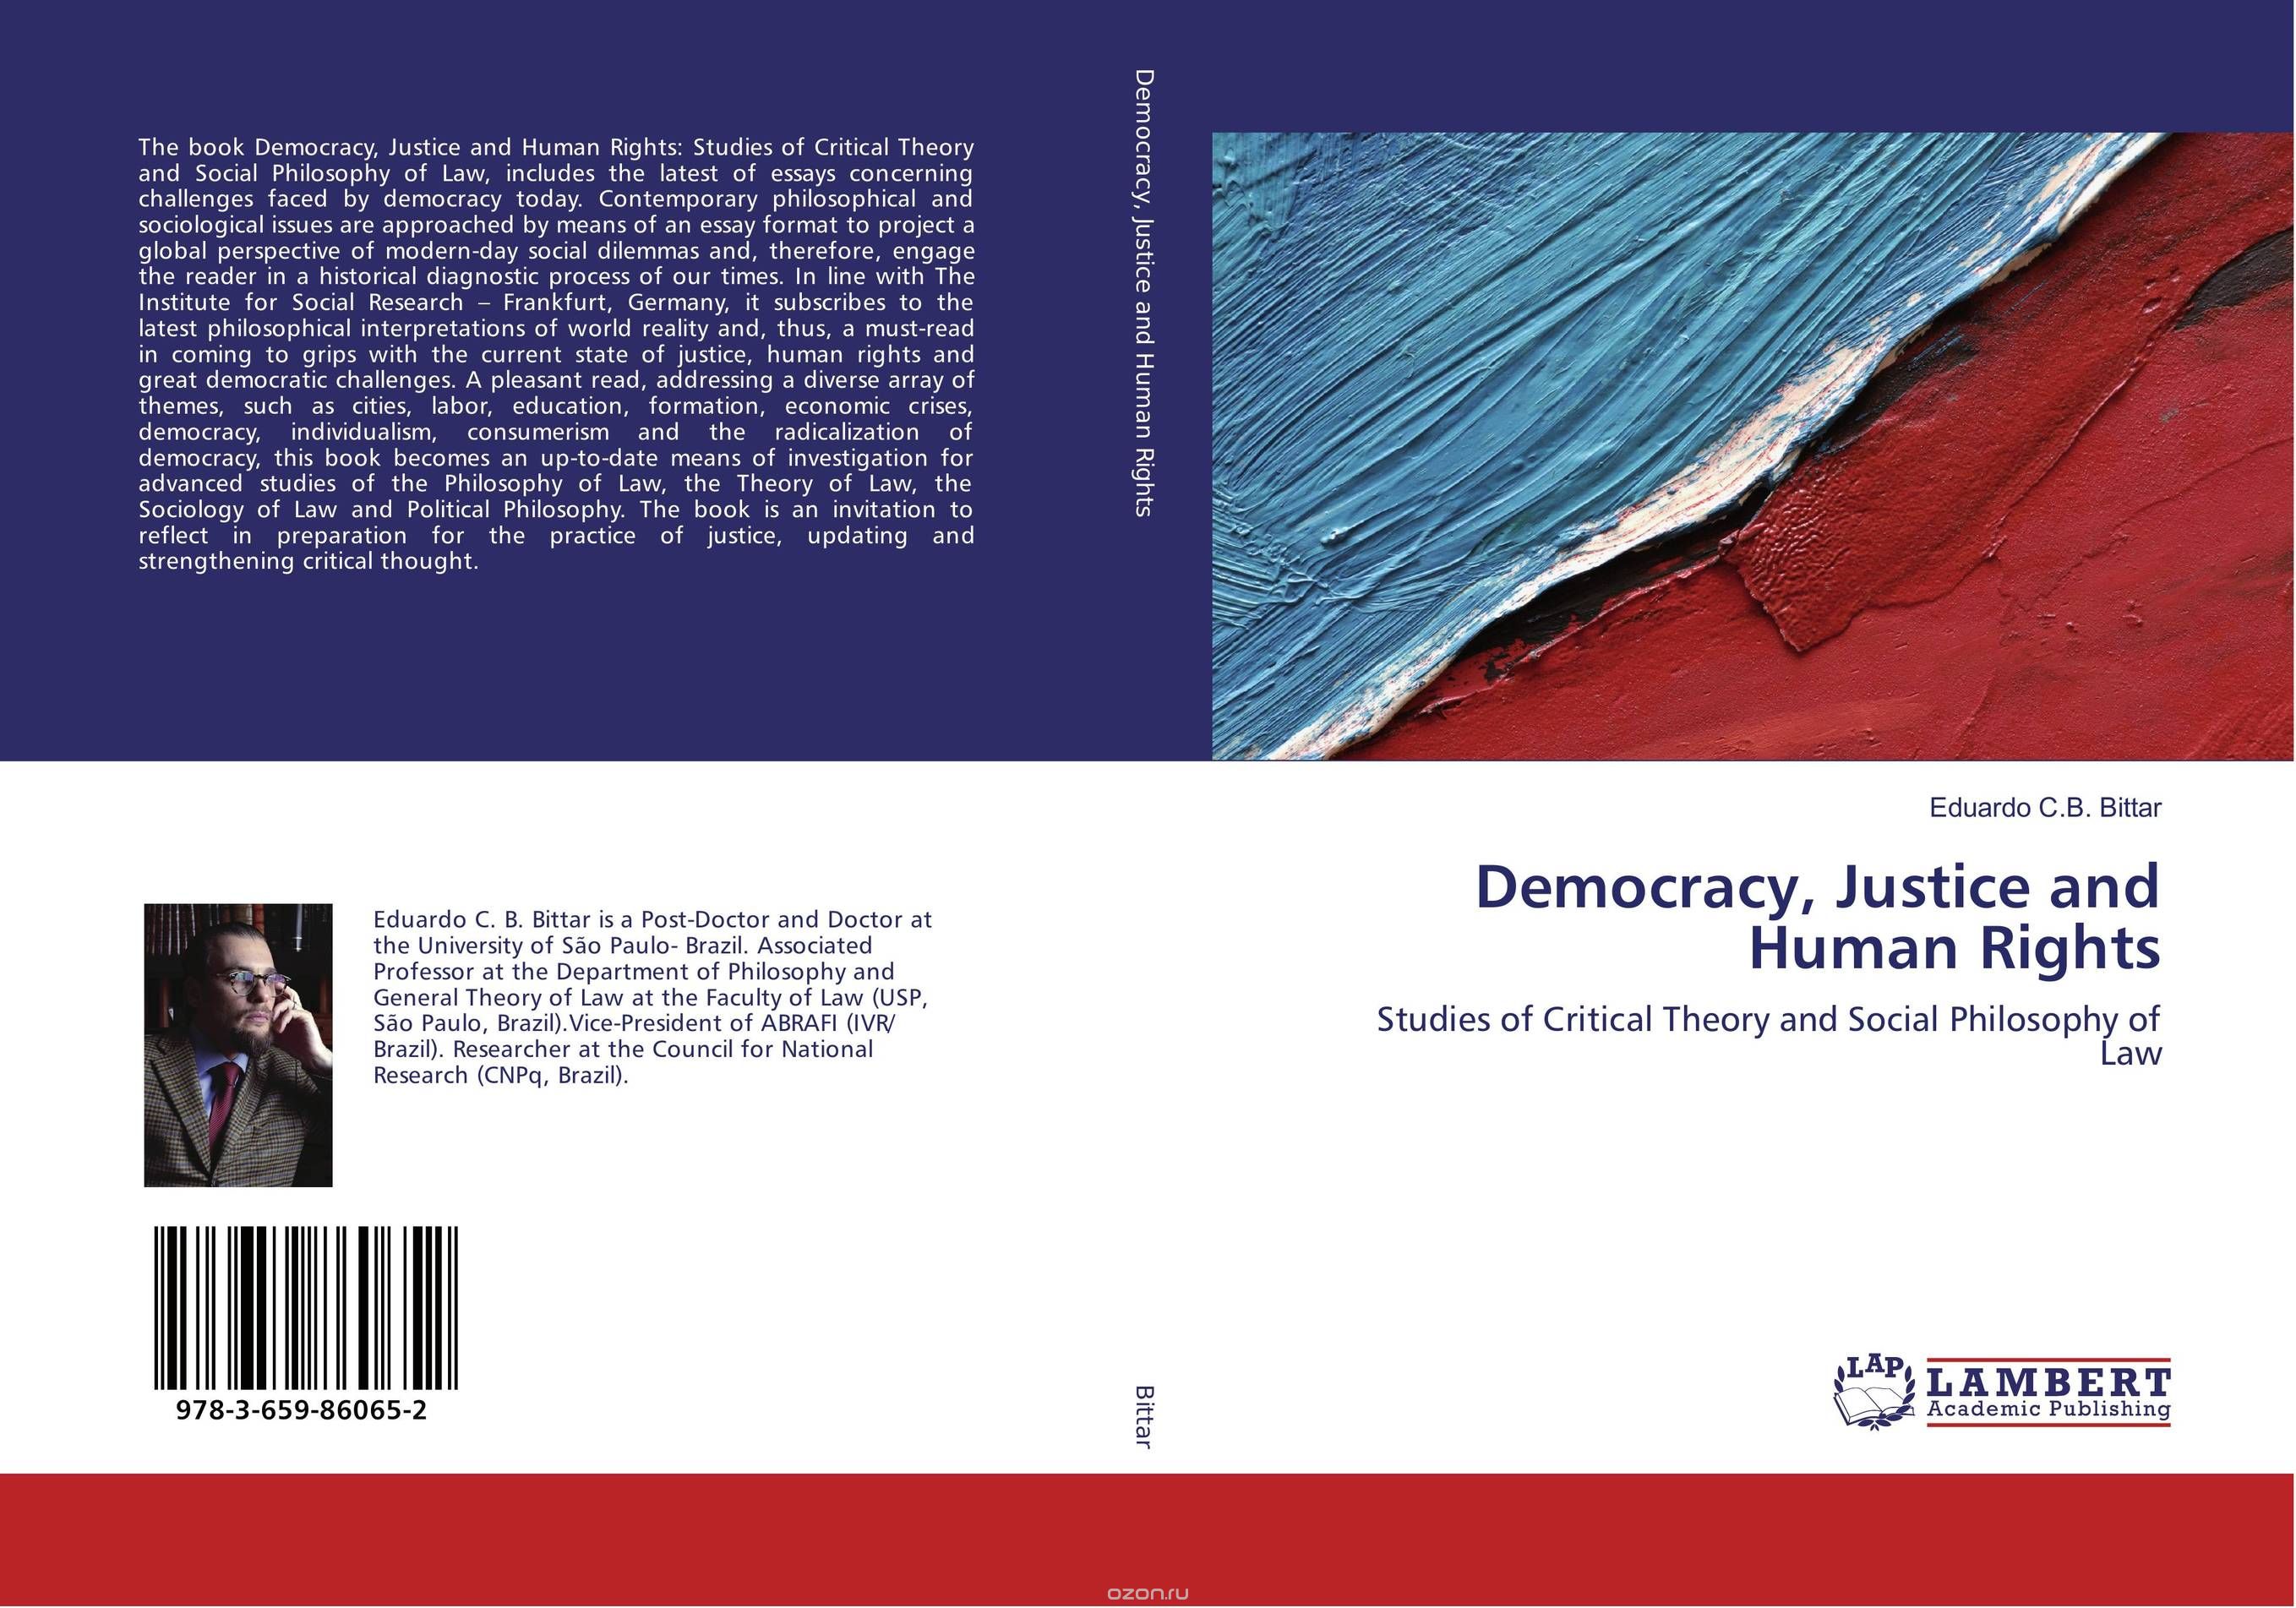 Скачать книгу "Democracy, Justice and Human Rights"